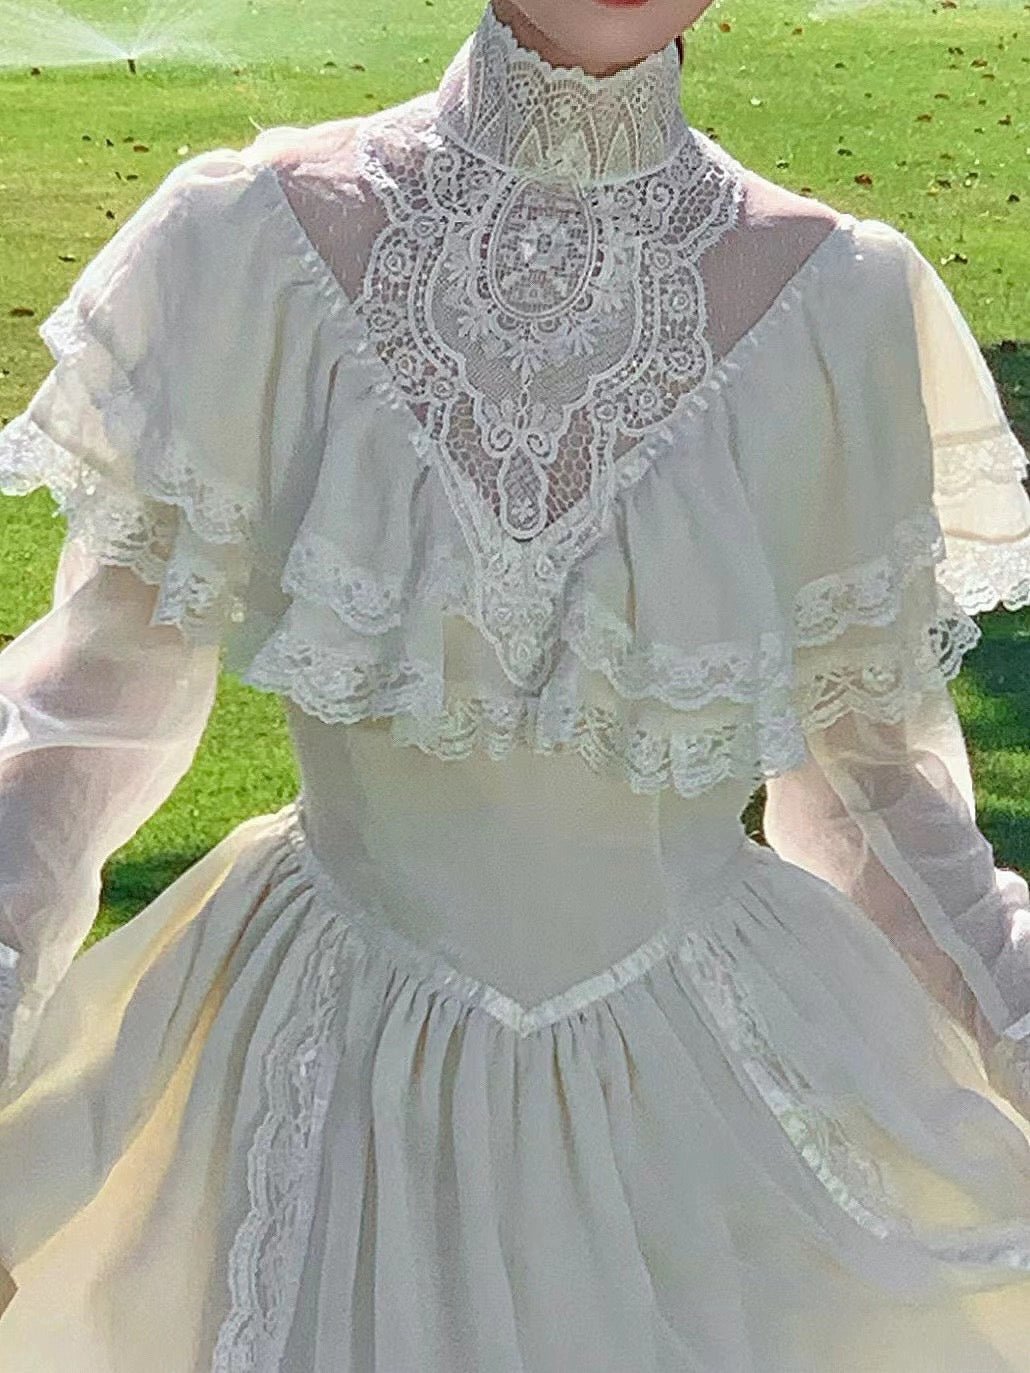 Gunne Sax Vintage Inspired Cream White Lace Dress - 70s Style Victorian Prom Wedding Dress - Plus Size - WonderlandByLilian